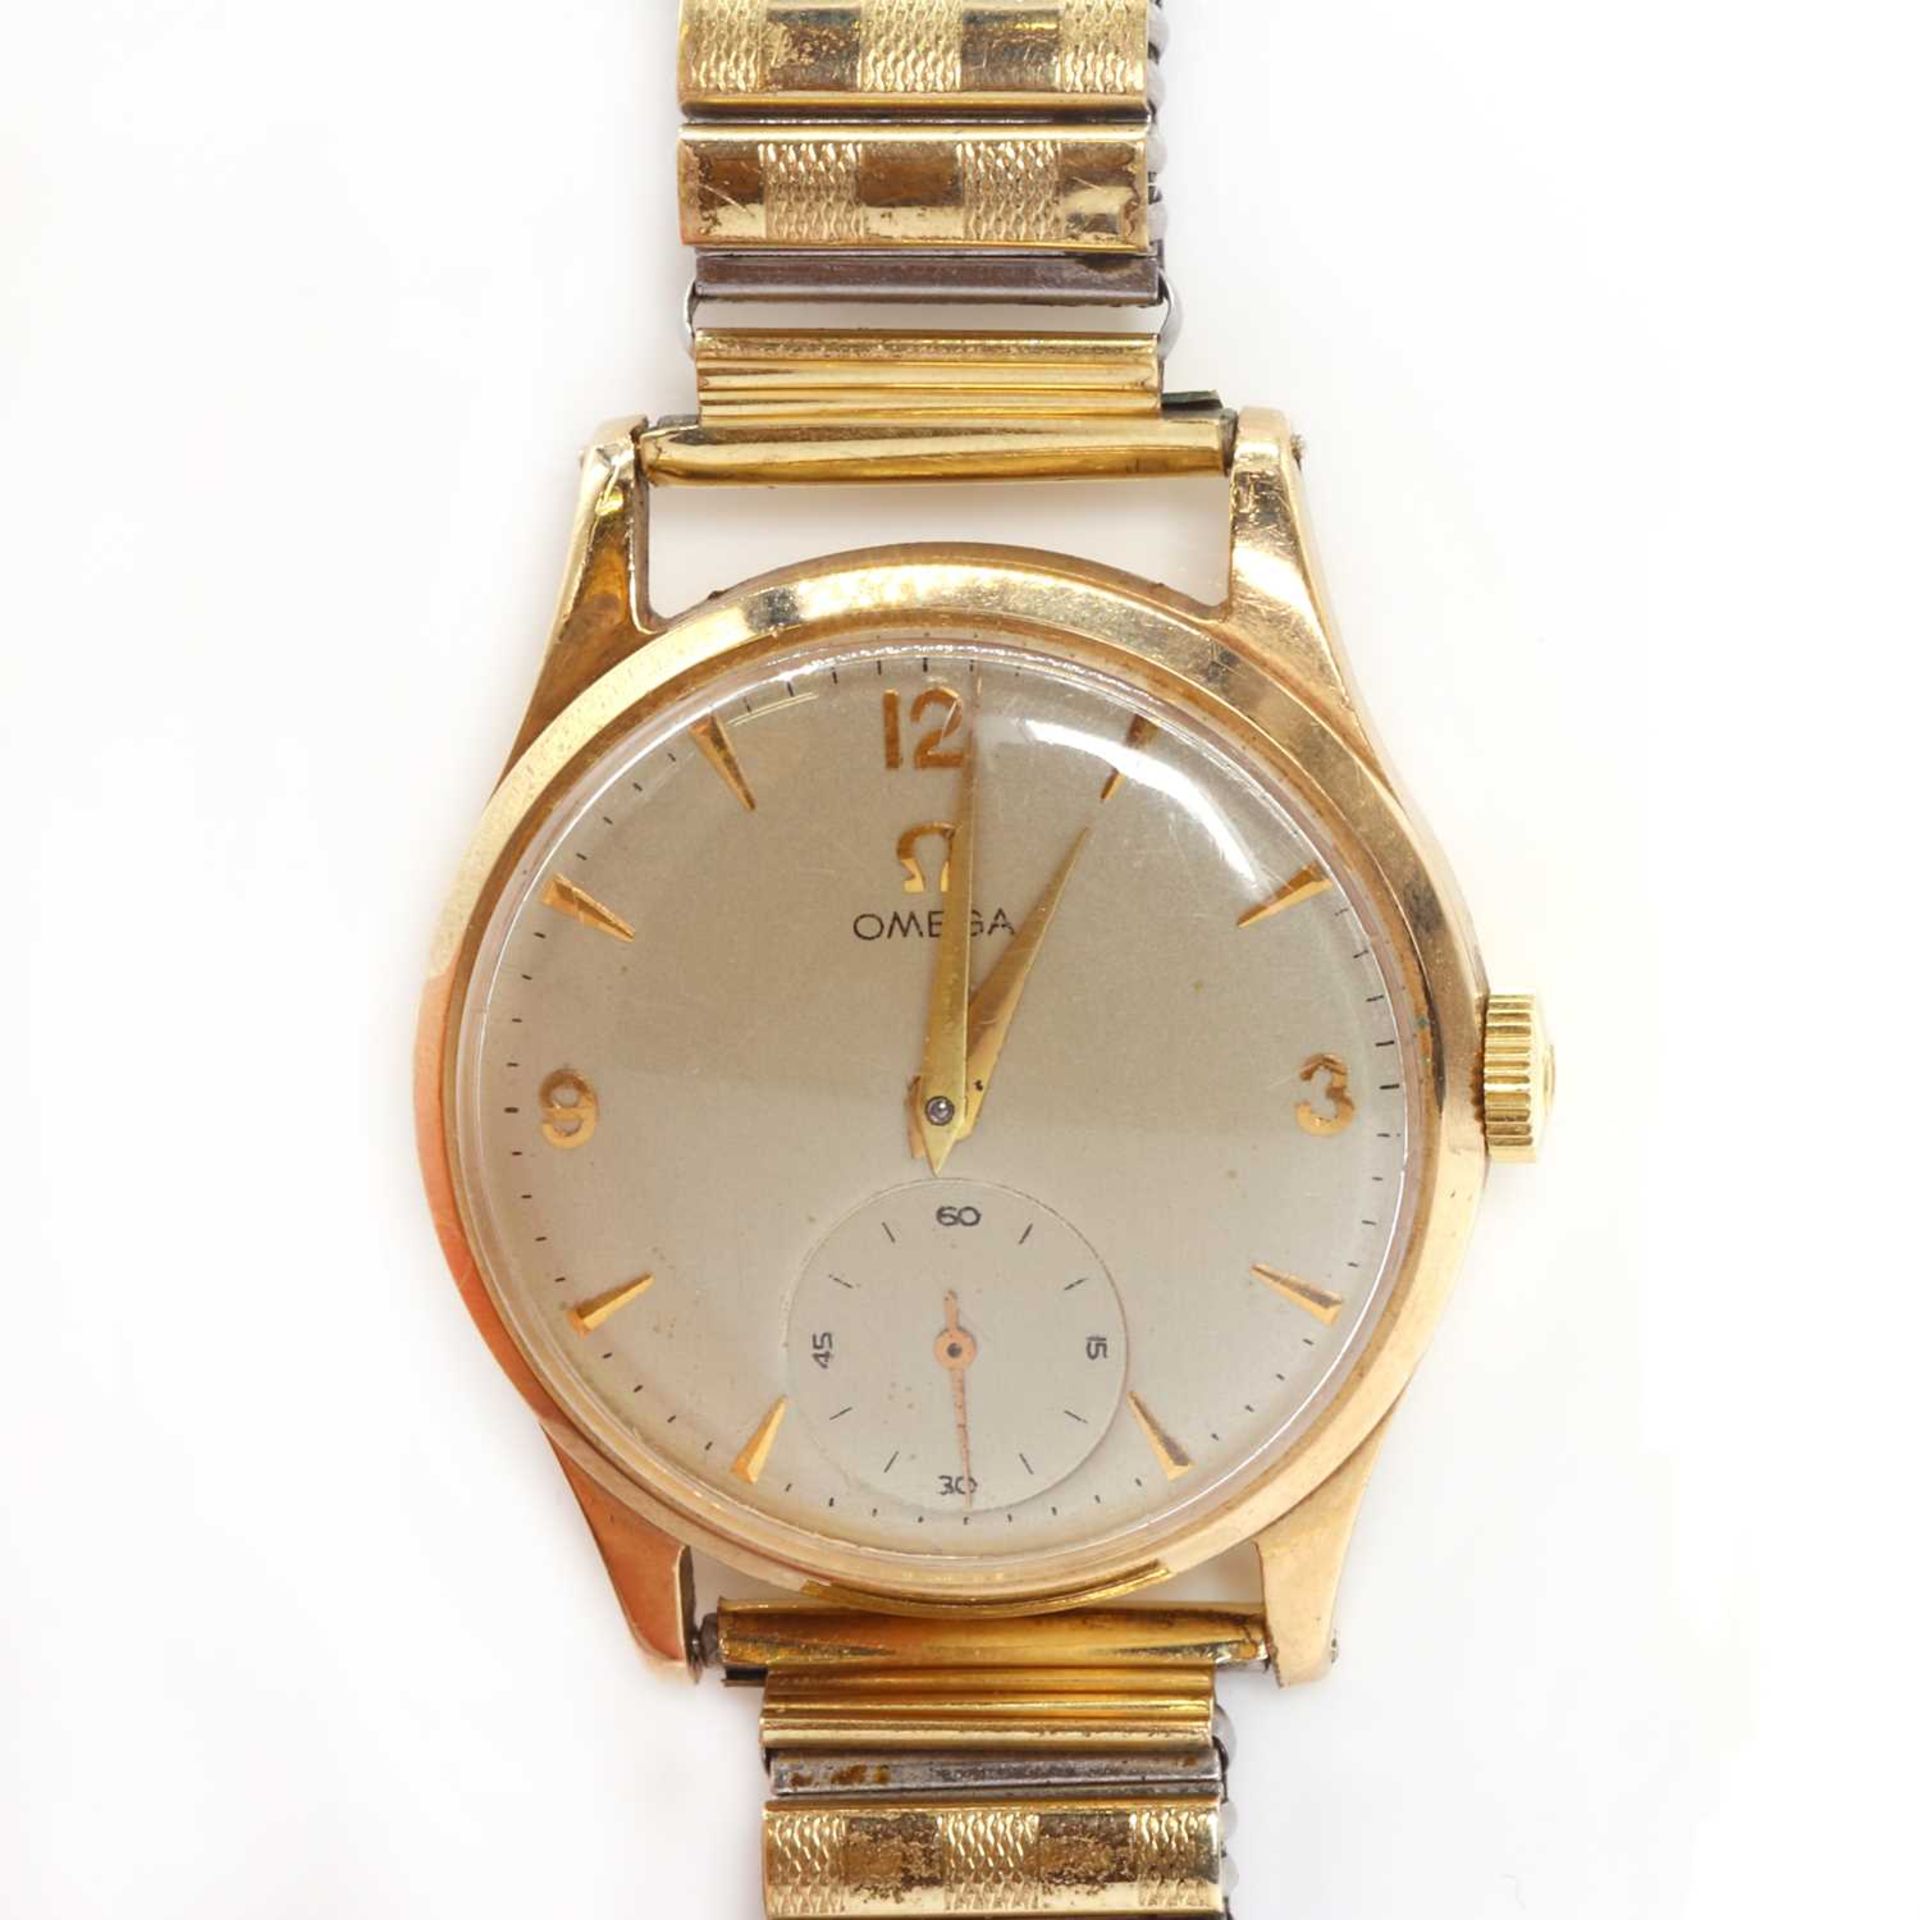 A gentlemen's 9ct gold Omega mechanical bracelet watch,